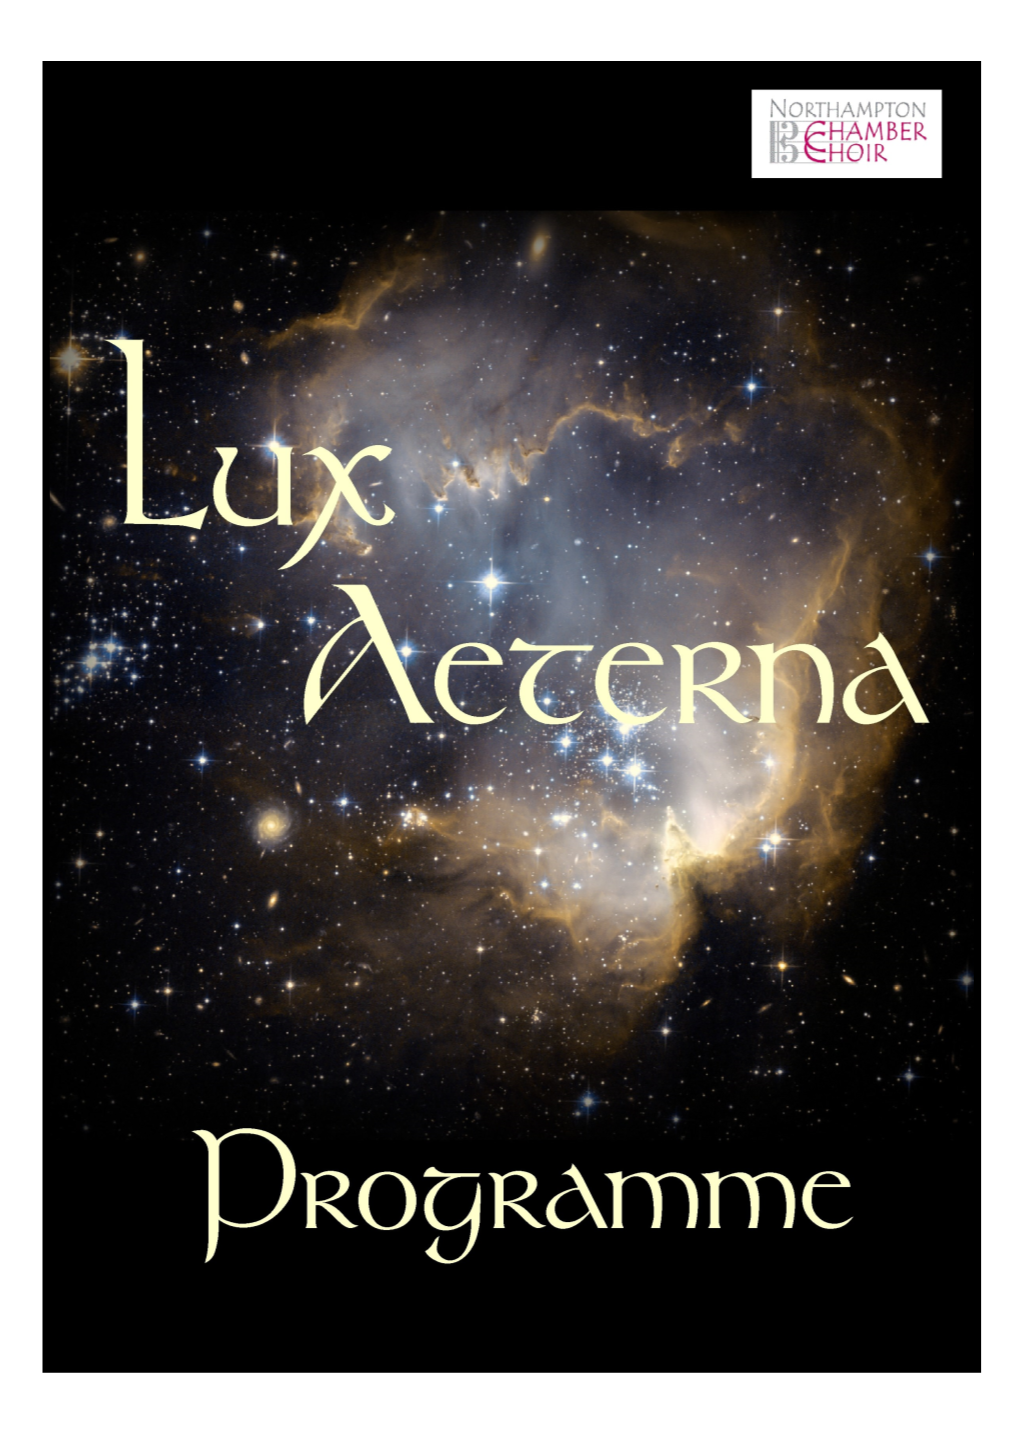 Lux Aeterna Concert Programme